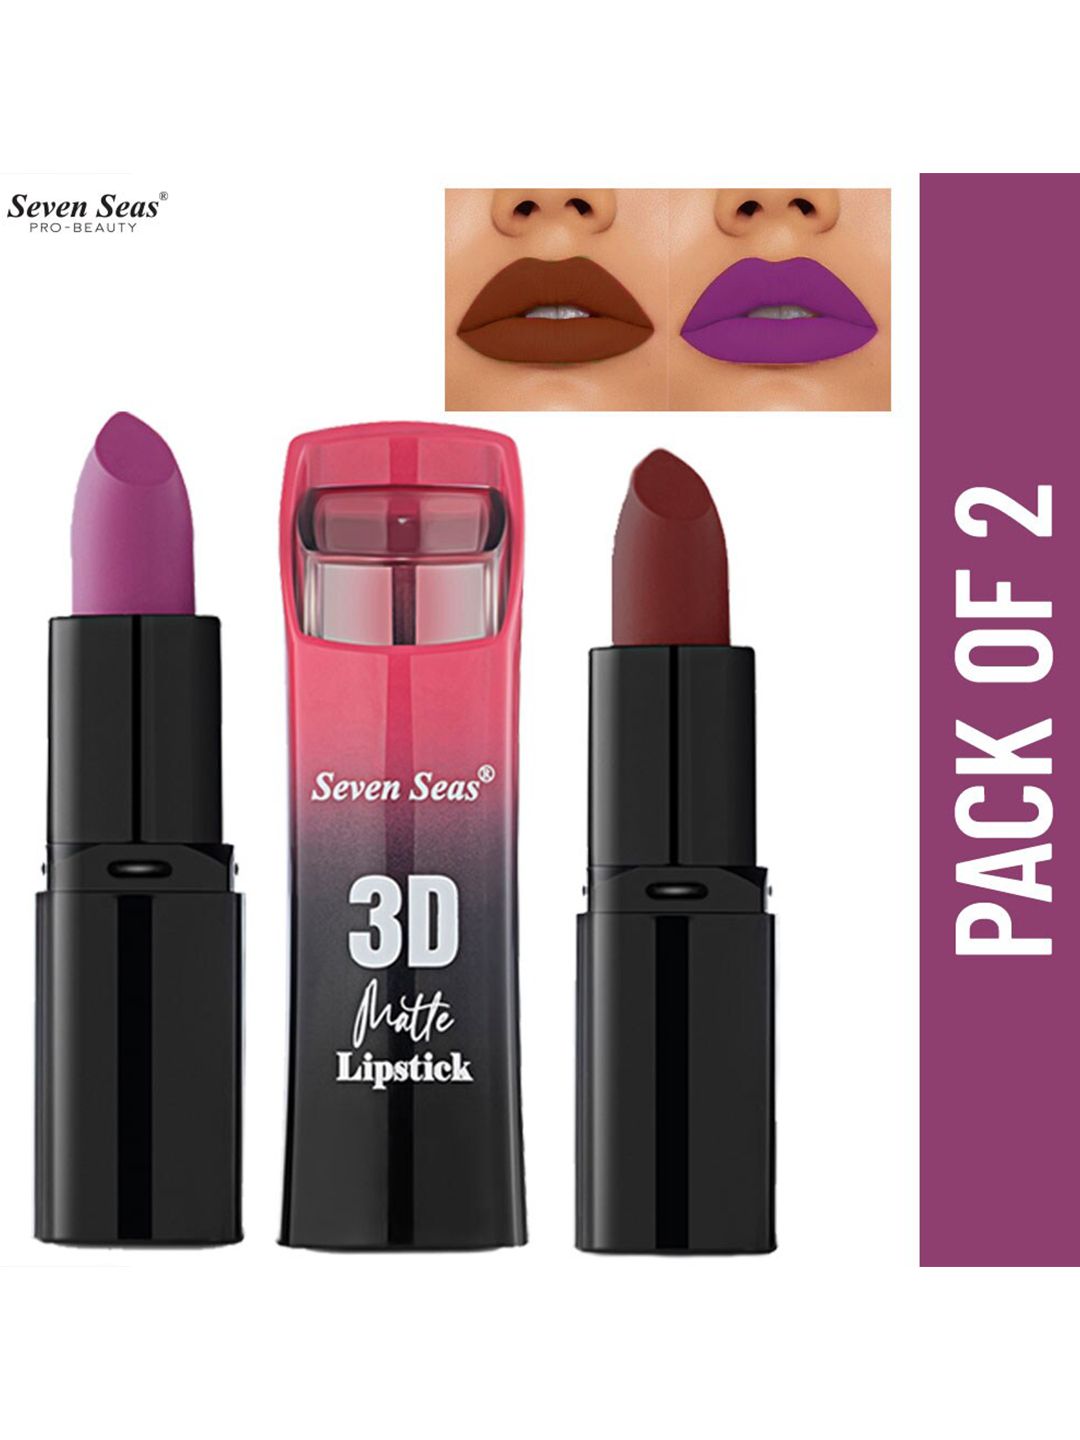 Seven Seas Set of 2 3D Matte Lipstick - Claret 310 & Rose 306 Price in India